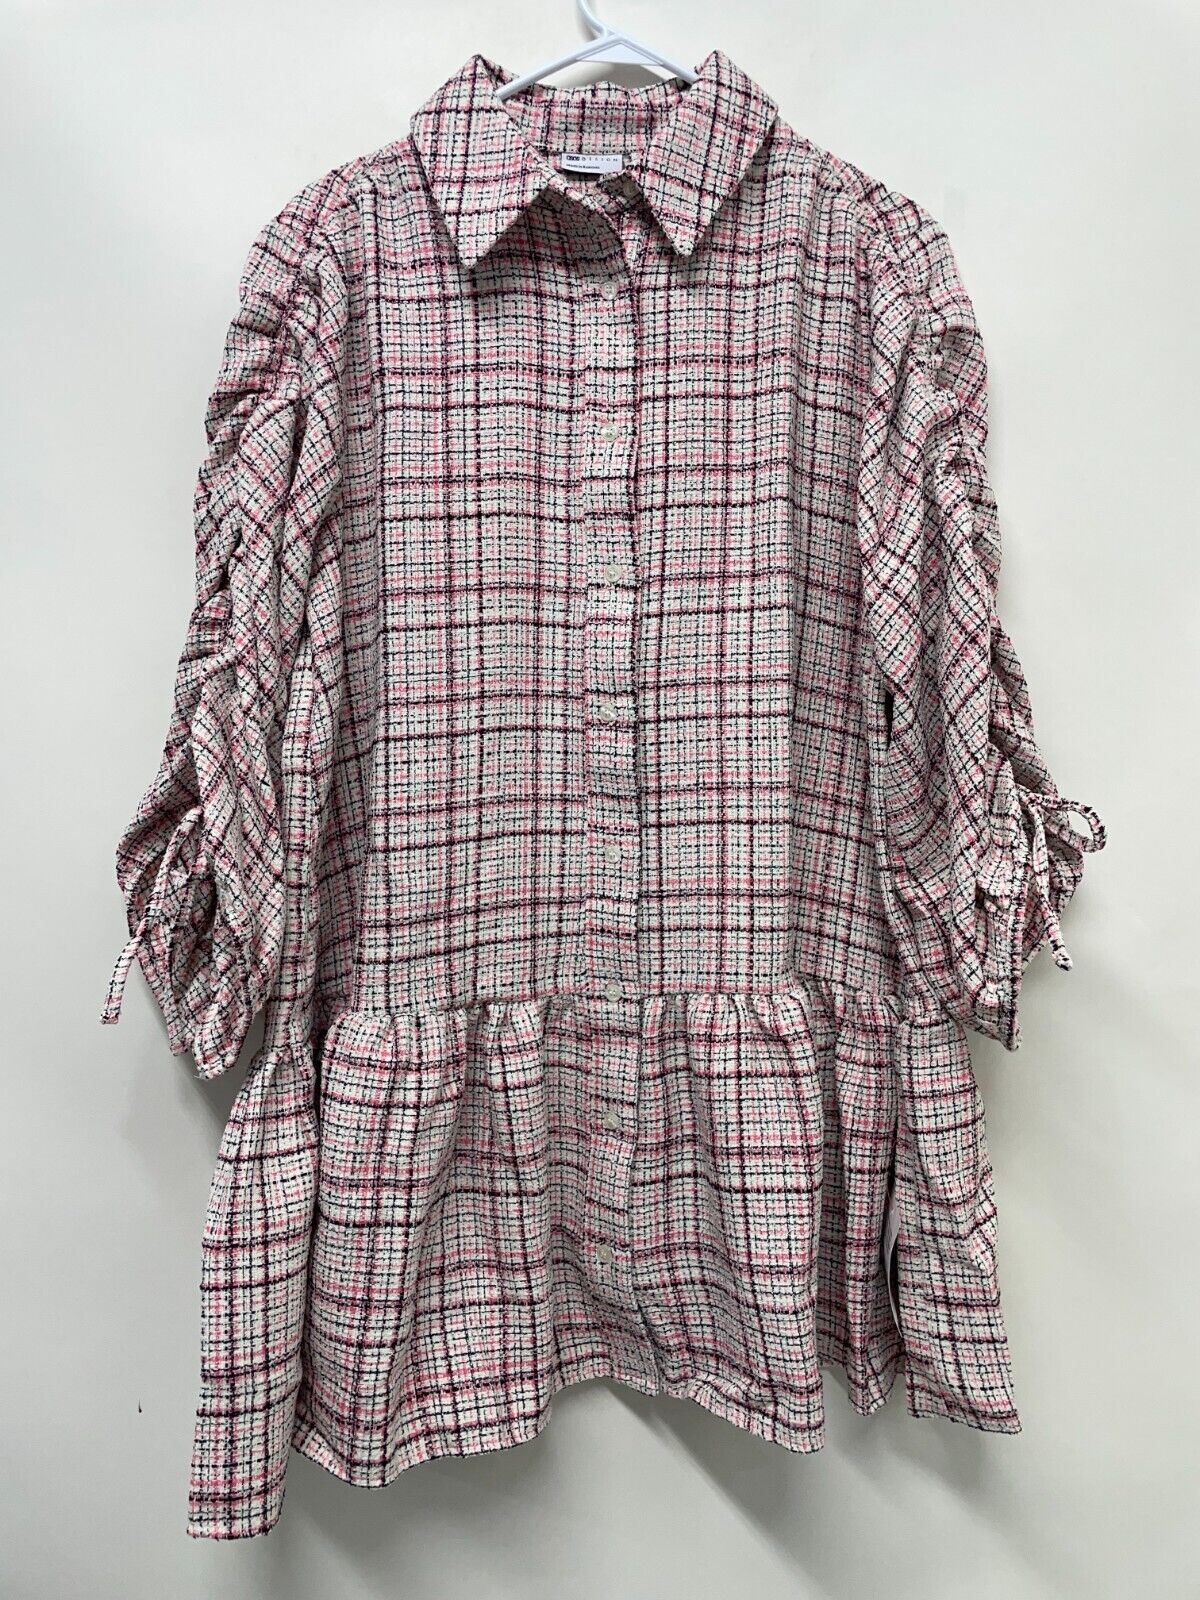 ASOS Women's 10 Petite Boucle Mini Smock Shirt Dress with Pephem Cream/Pink NWT